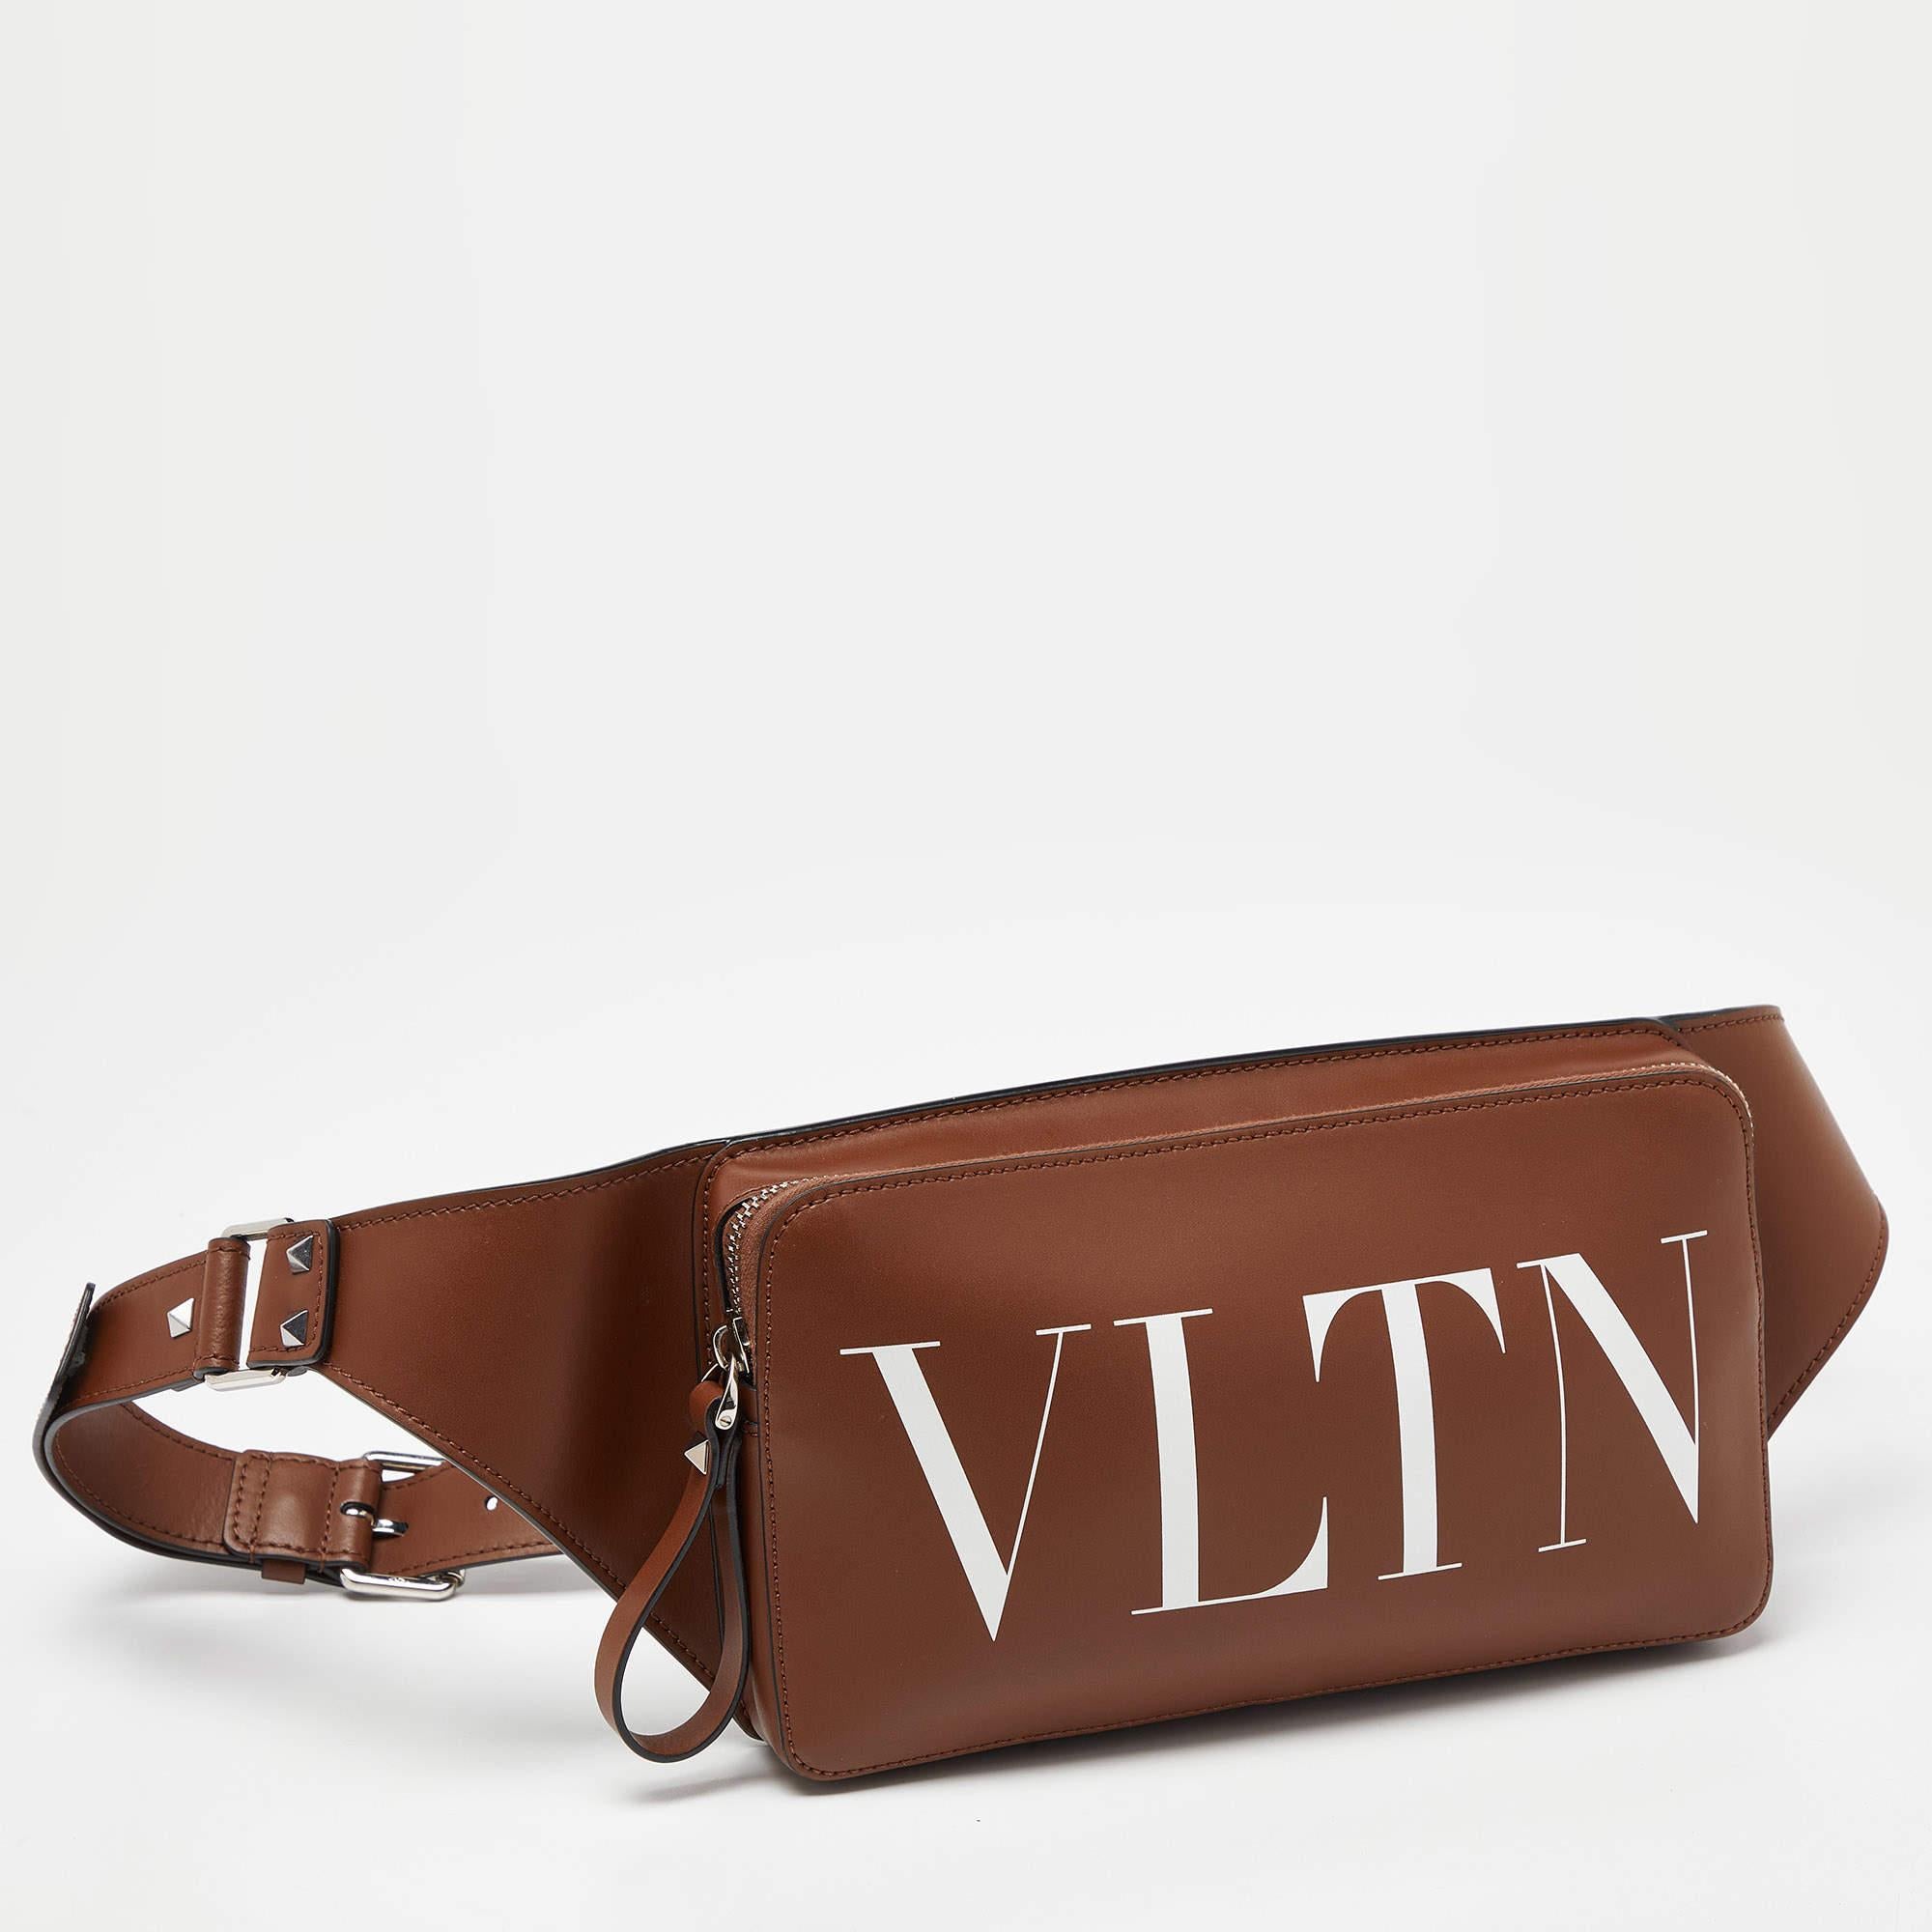 Valentino Brown Leather VLTN Belt Bag In Excellent Condition For Sale In Dubai, Al Qouz 2